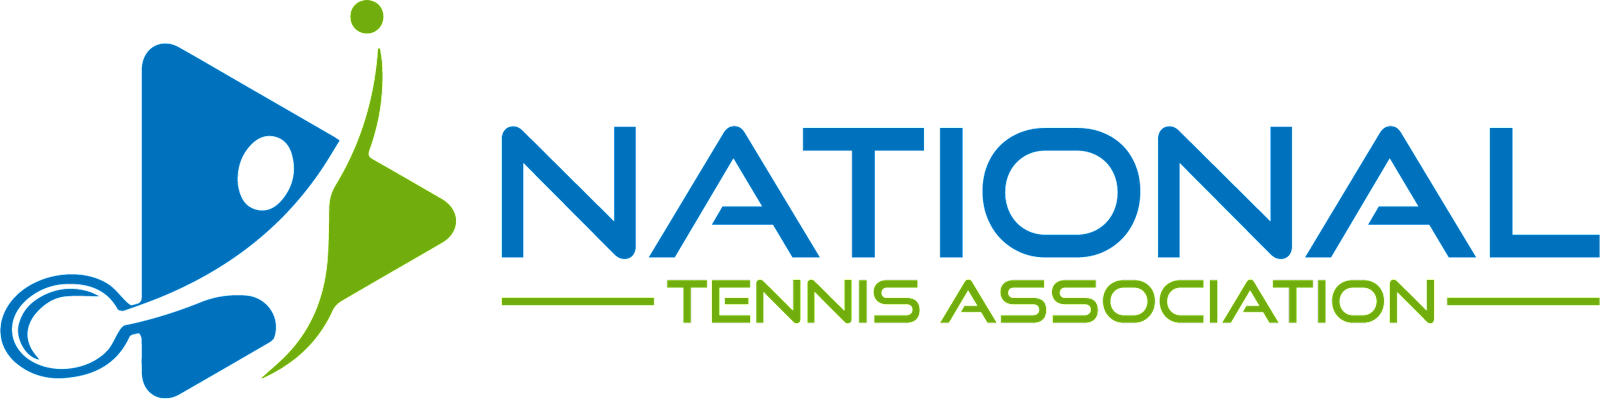 National Tennis